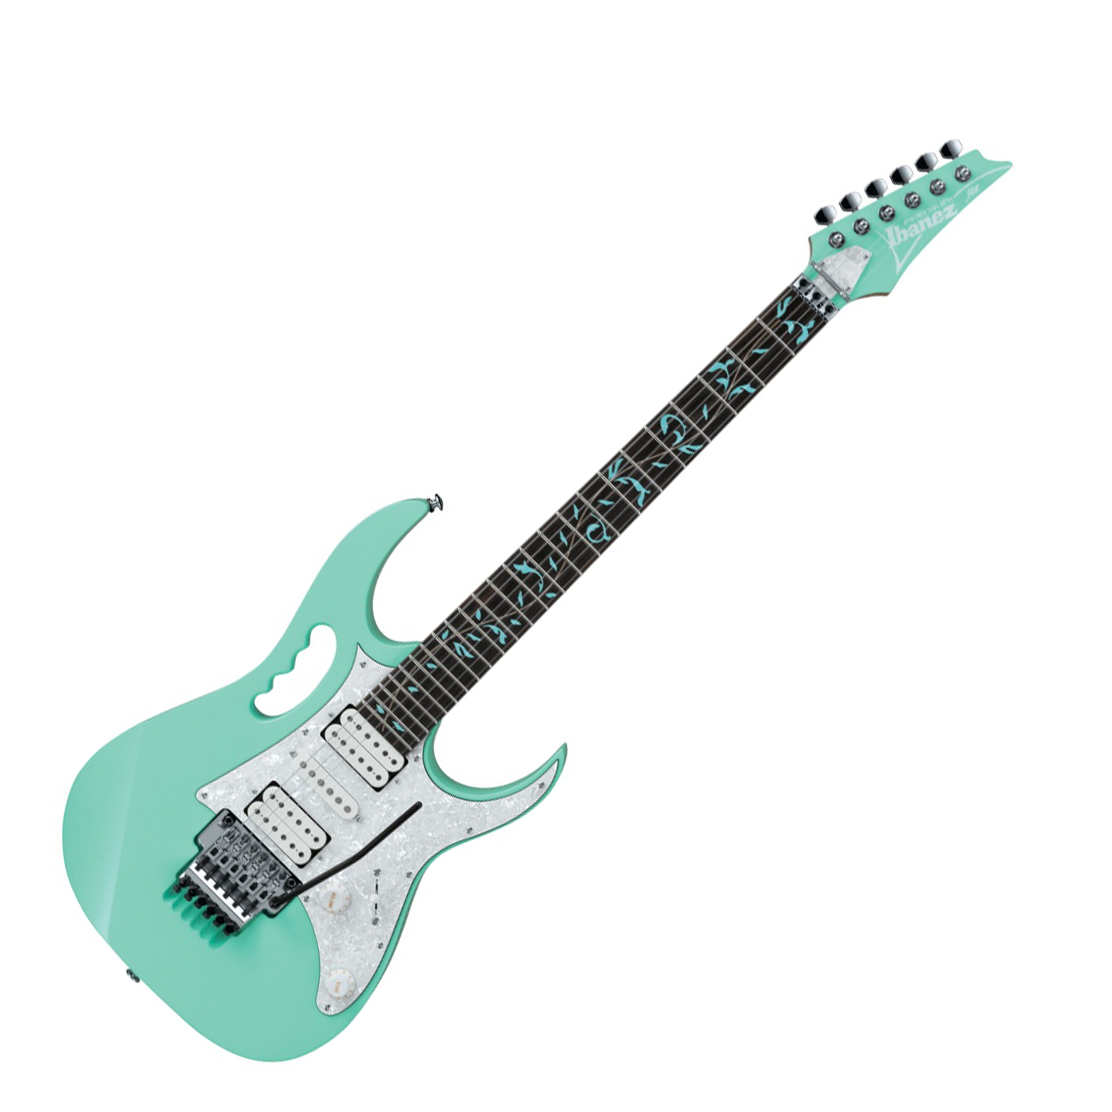 Ibanez Ibanez JEM70V Steve Vai Electric Guitar with Case - Seafoam Green